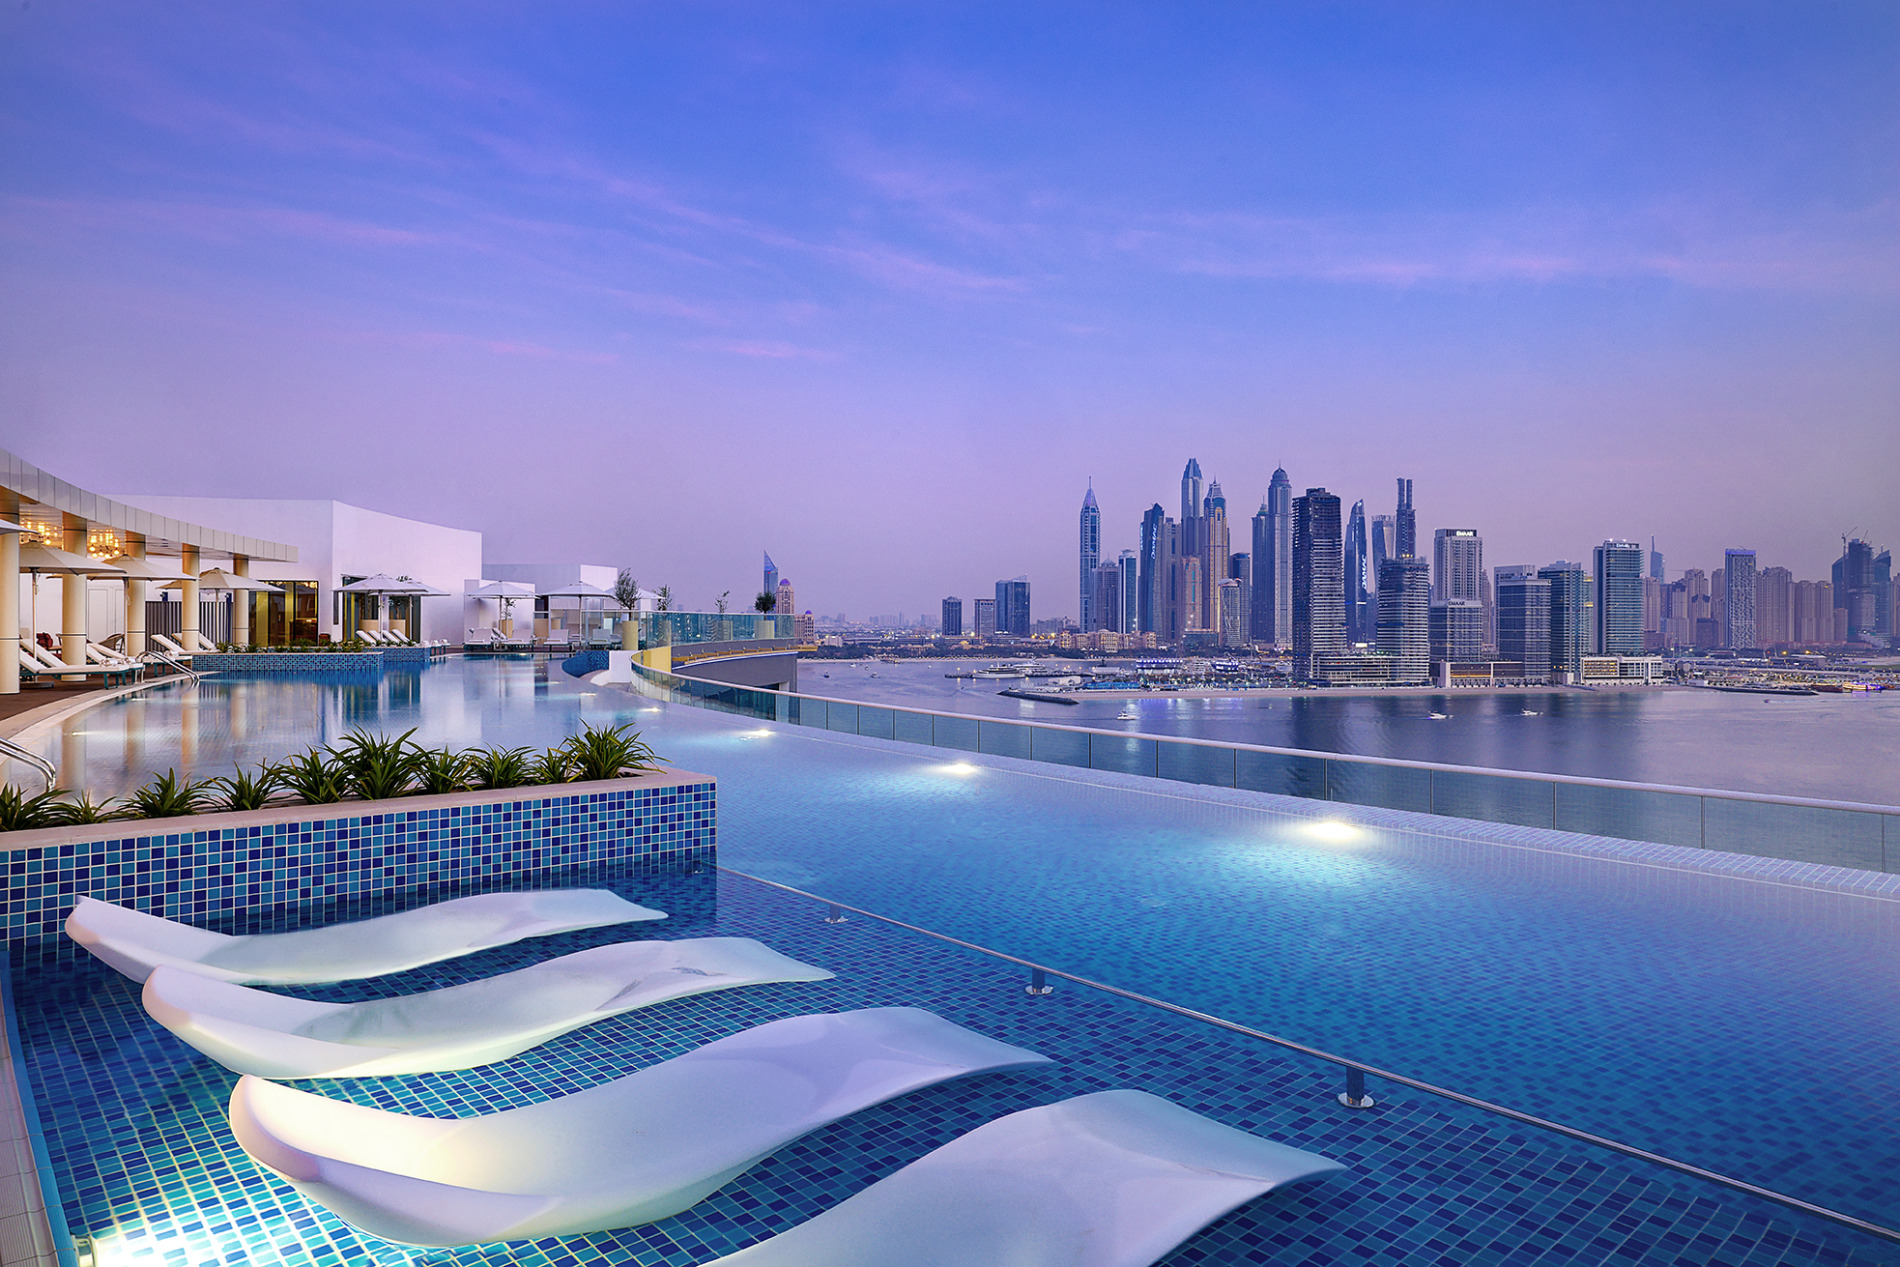 NH-Collection-Dubai-The-Palm-pool-and-skyline-view.